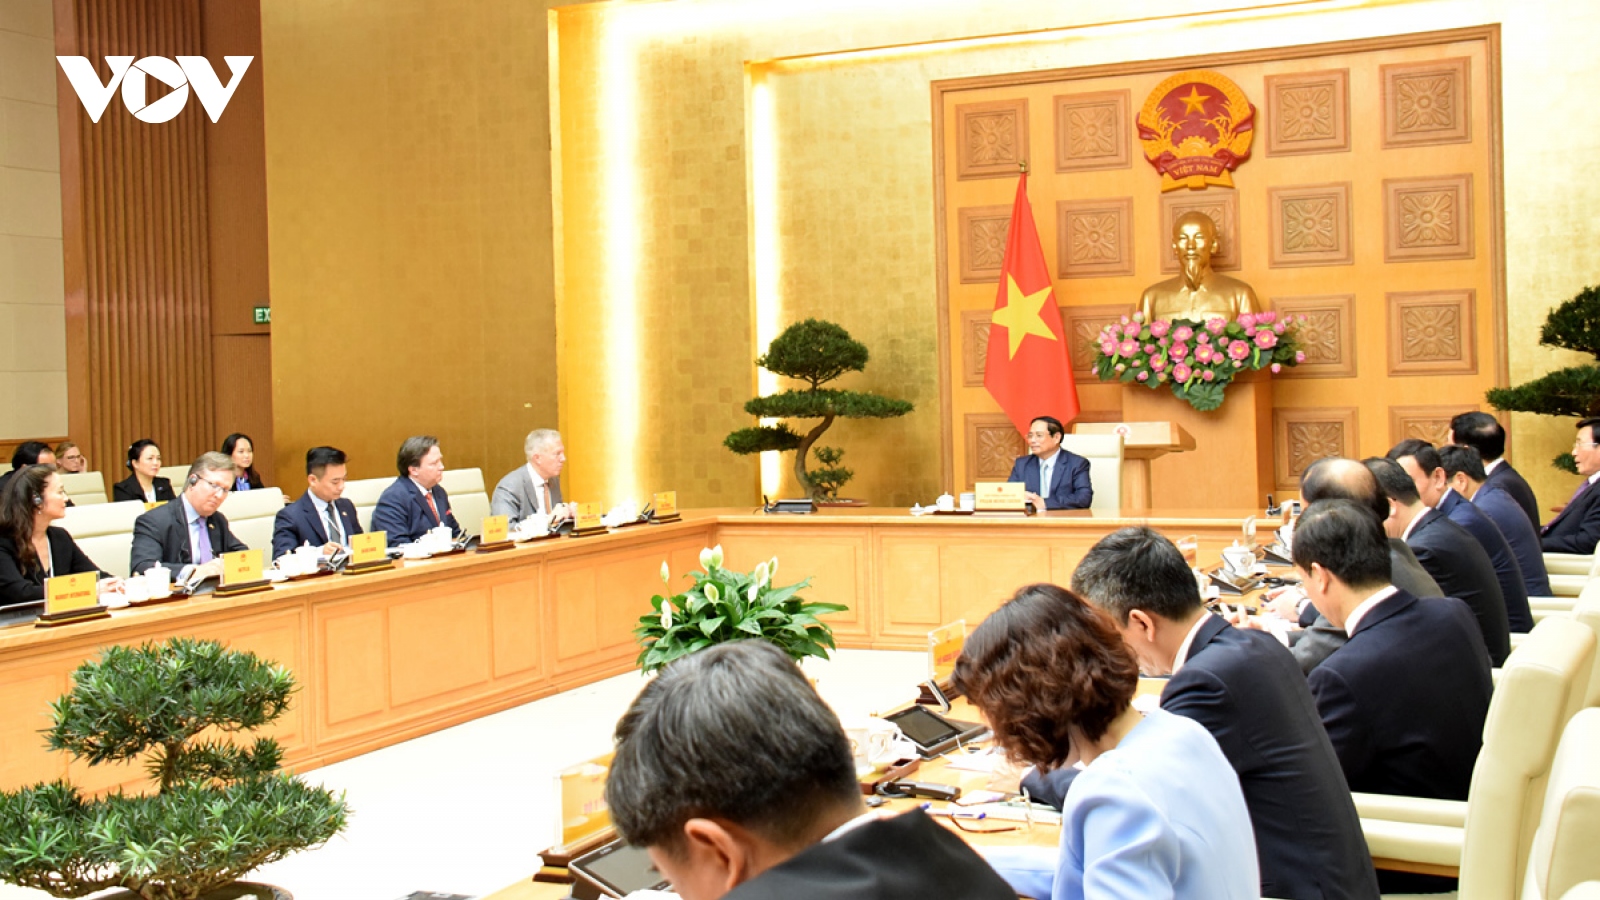 Vietnam welcomes US investors, says PM